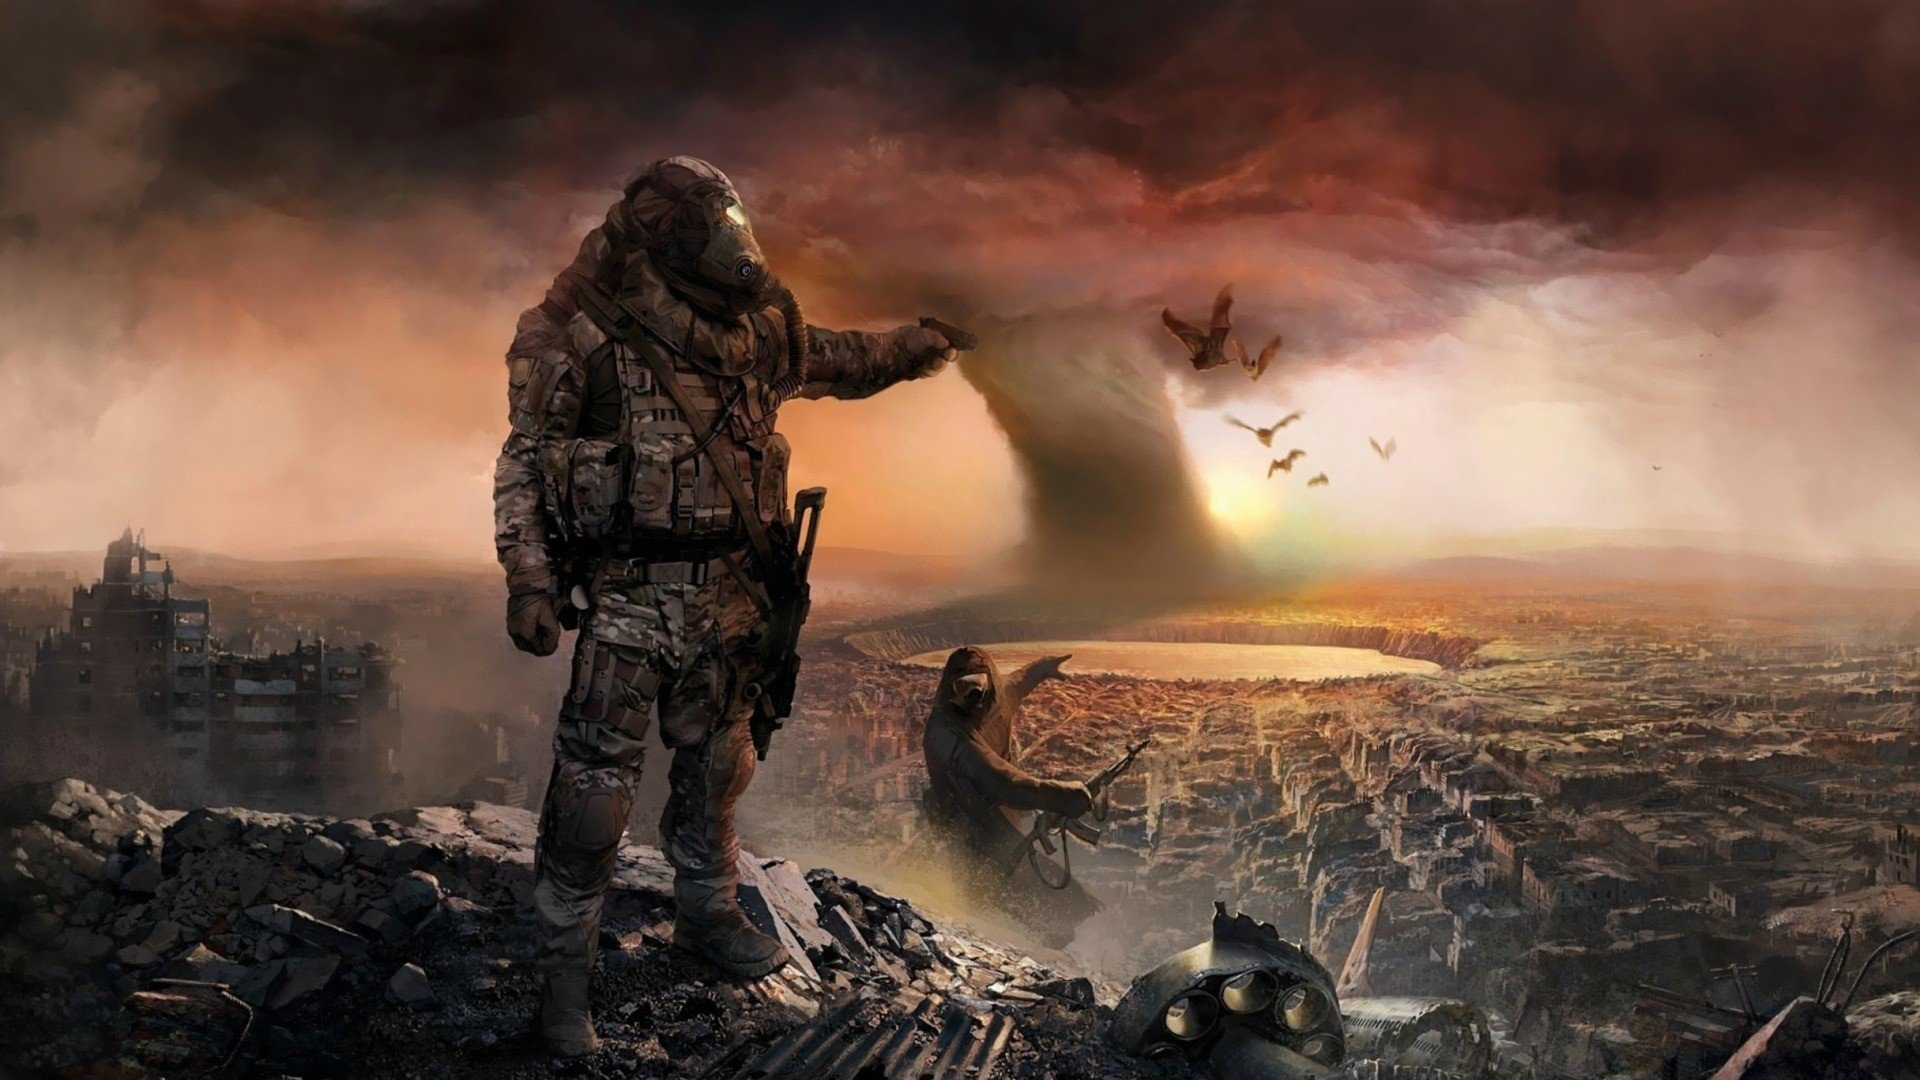 apocalypse fantasy art wallpaper background